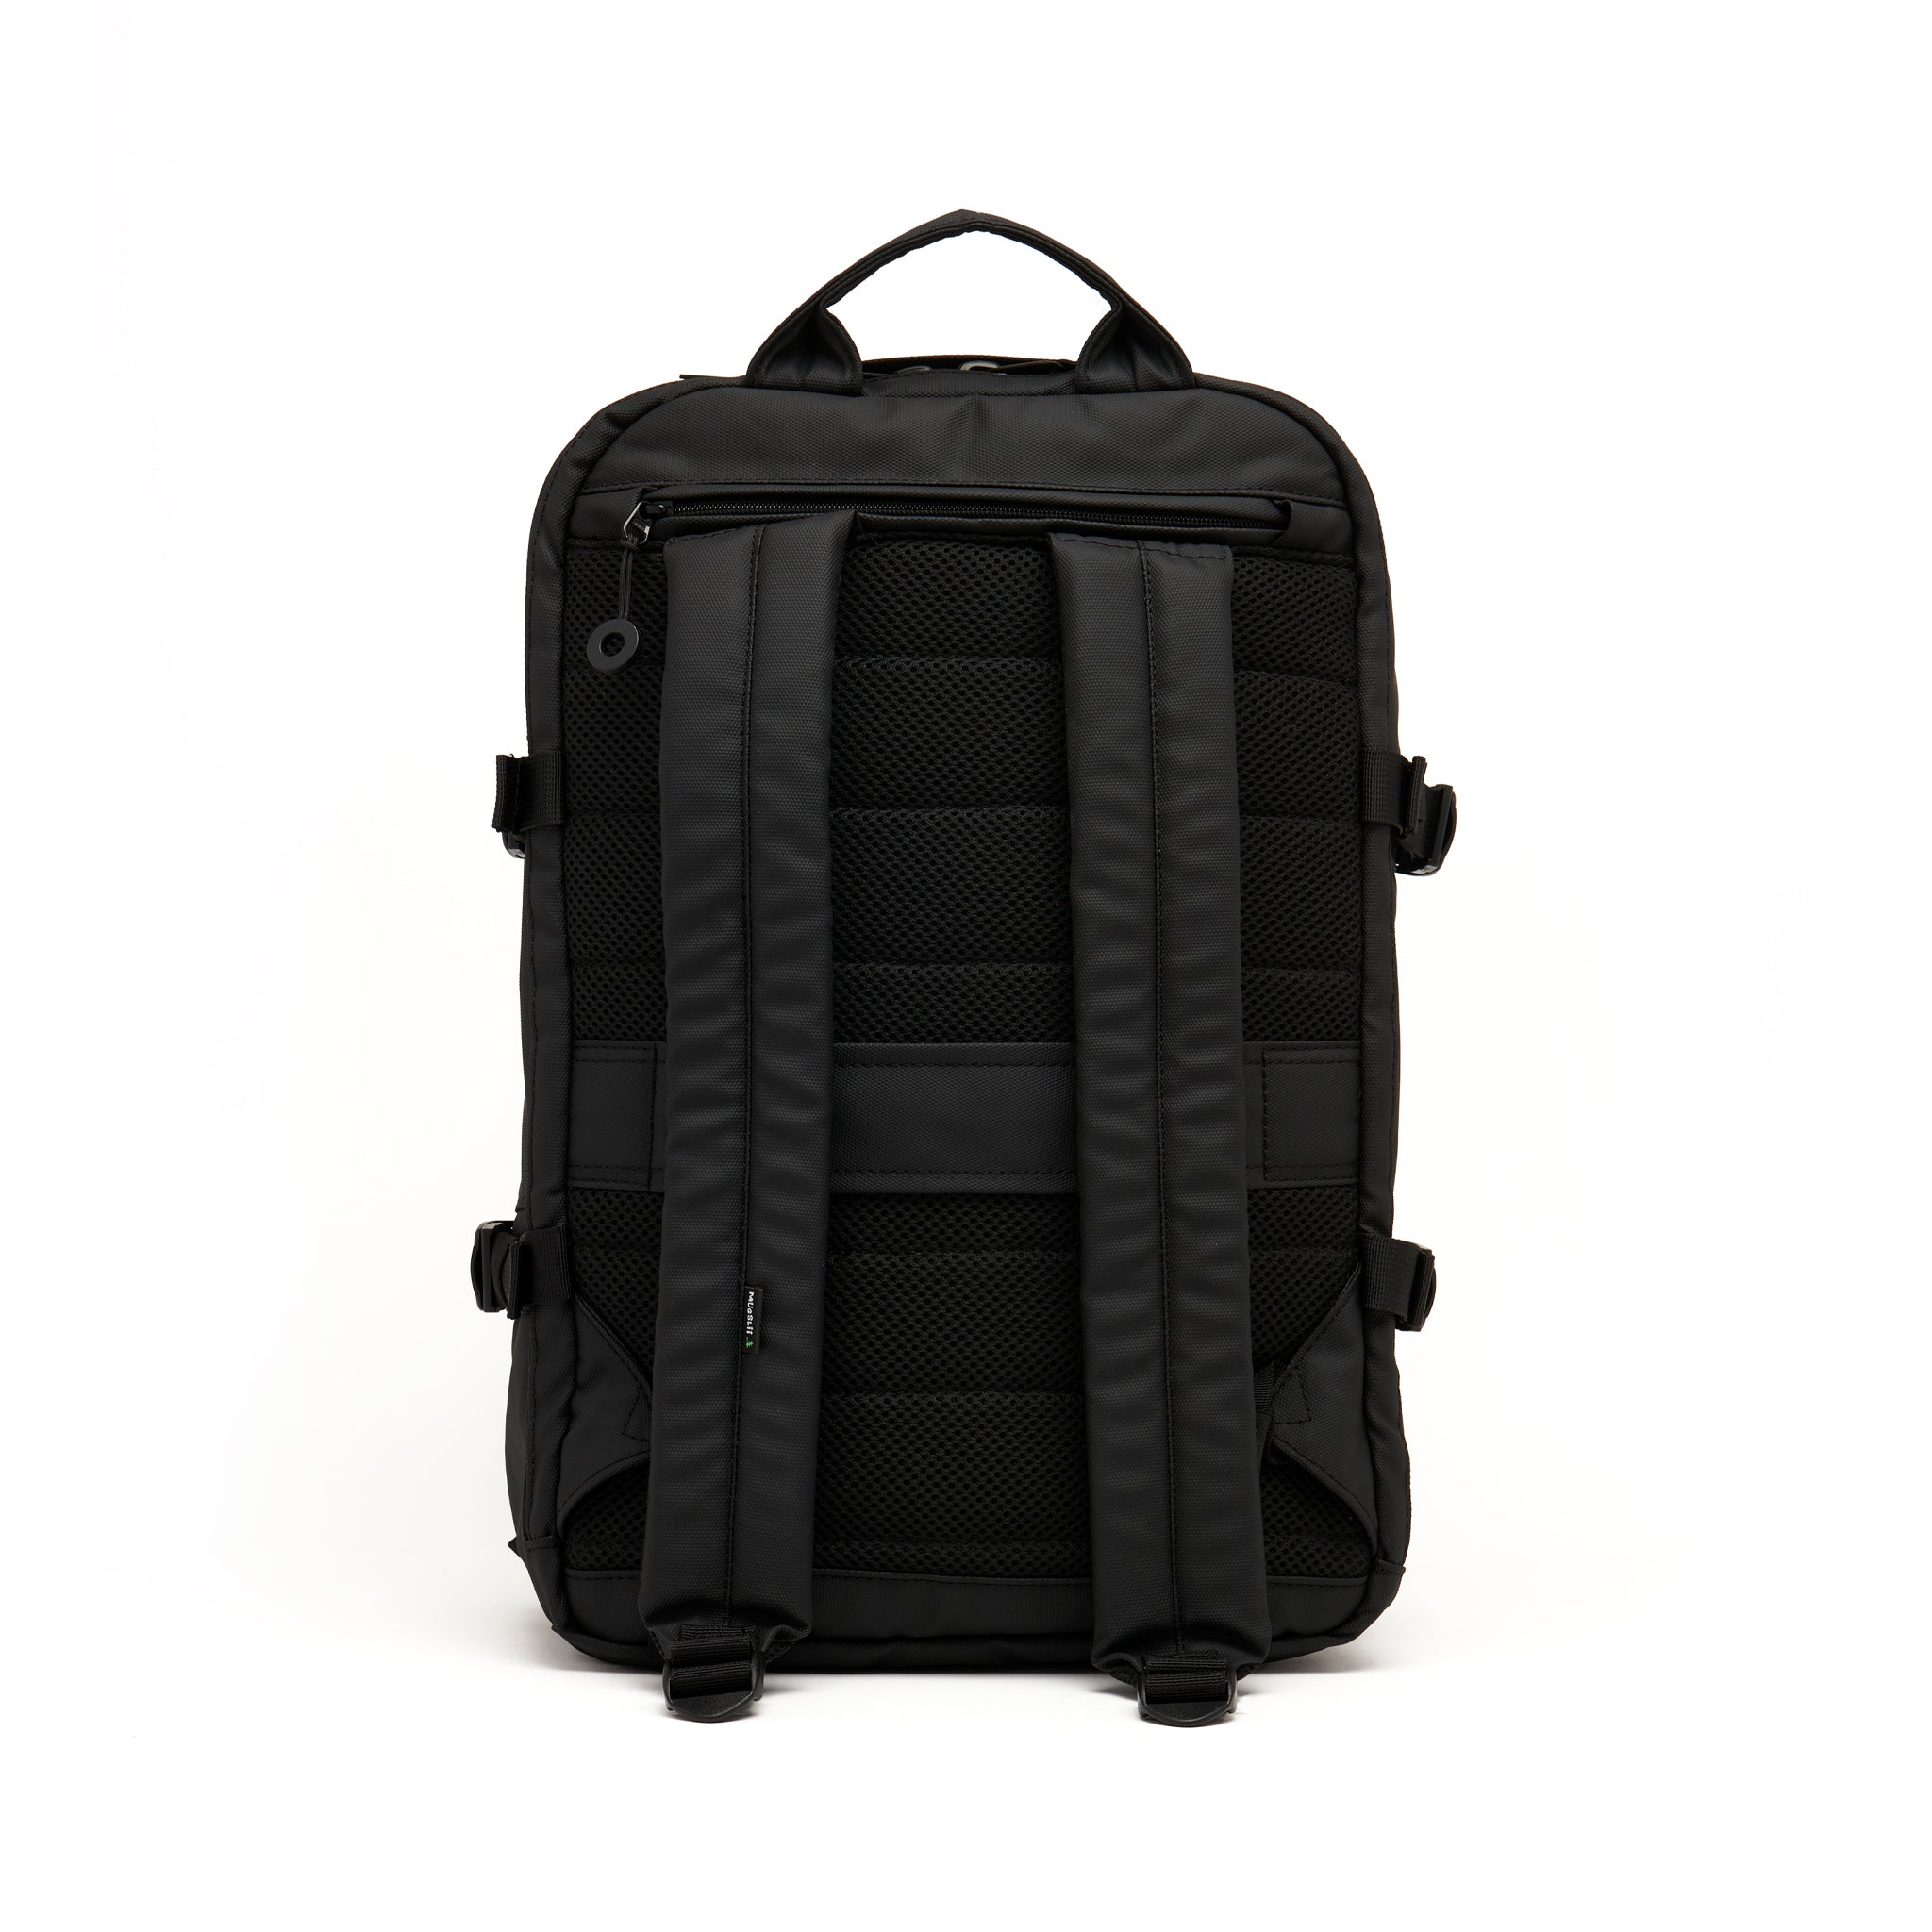 Mueslii travel backpack, made of PU coated waterproof nylon, color black, back view.